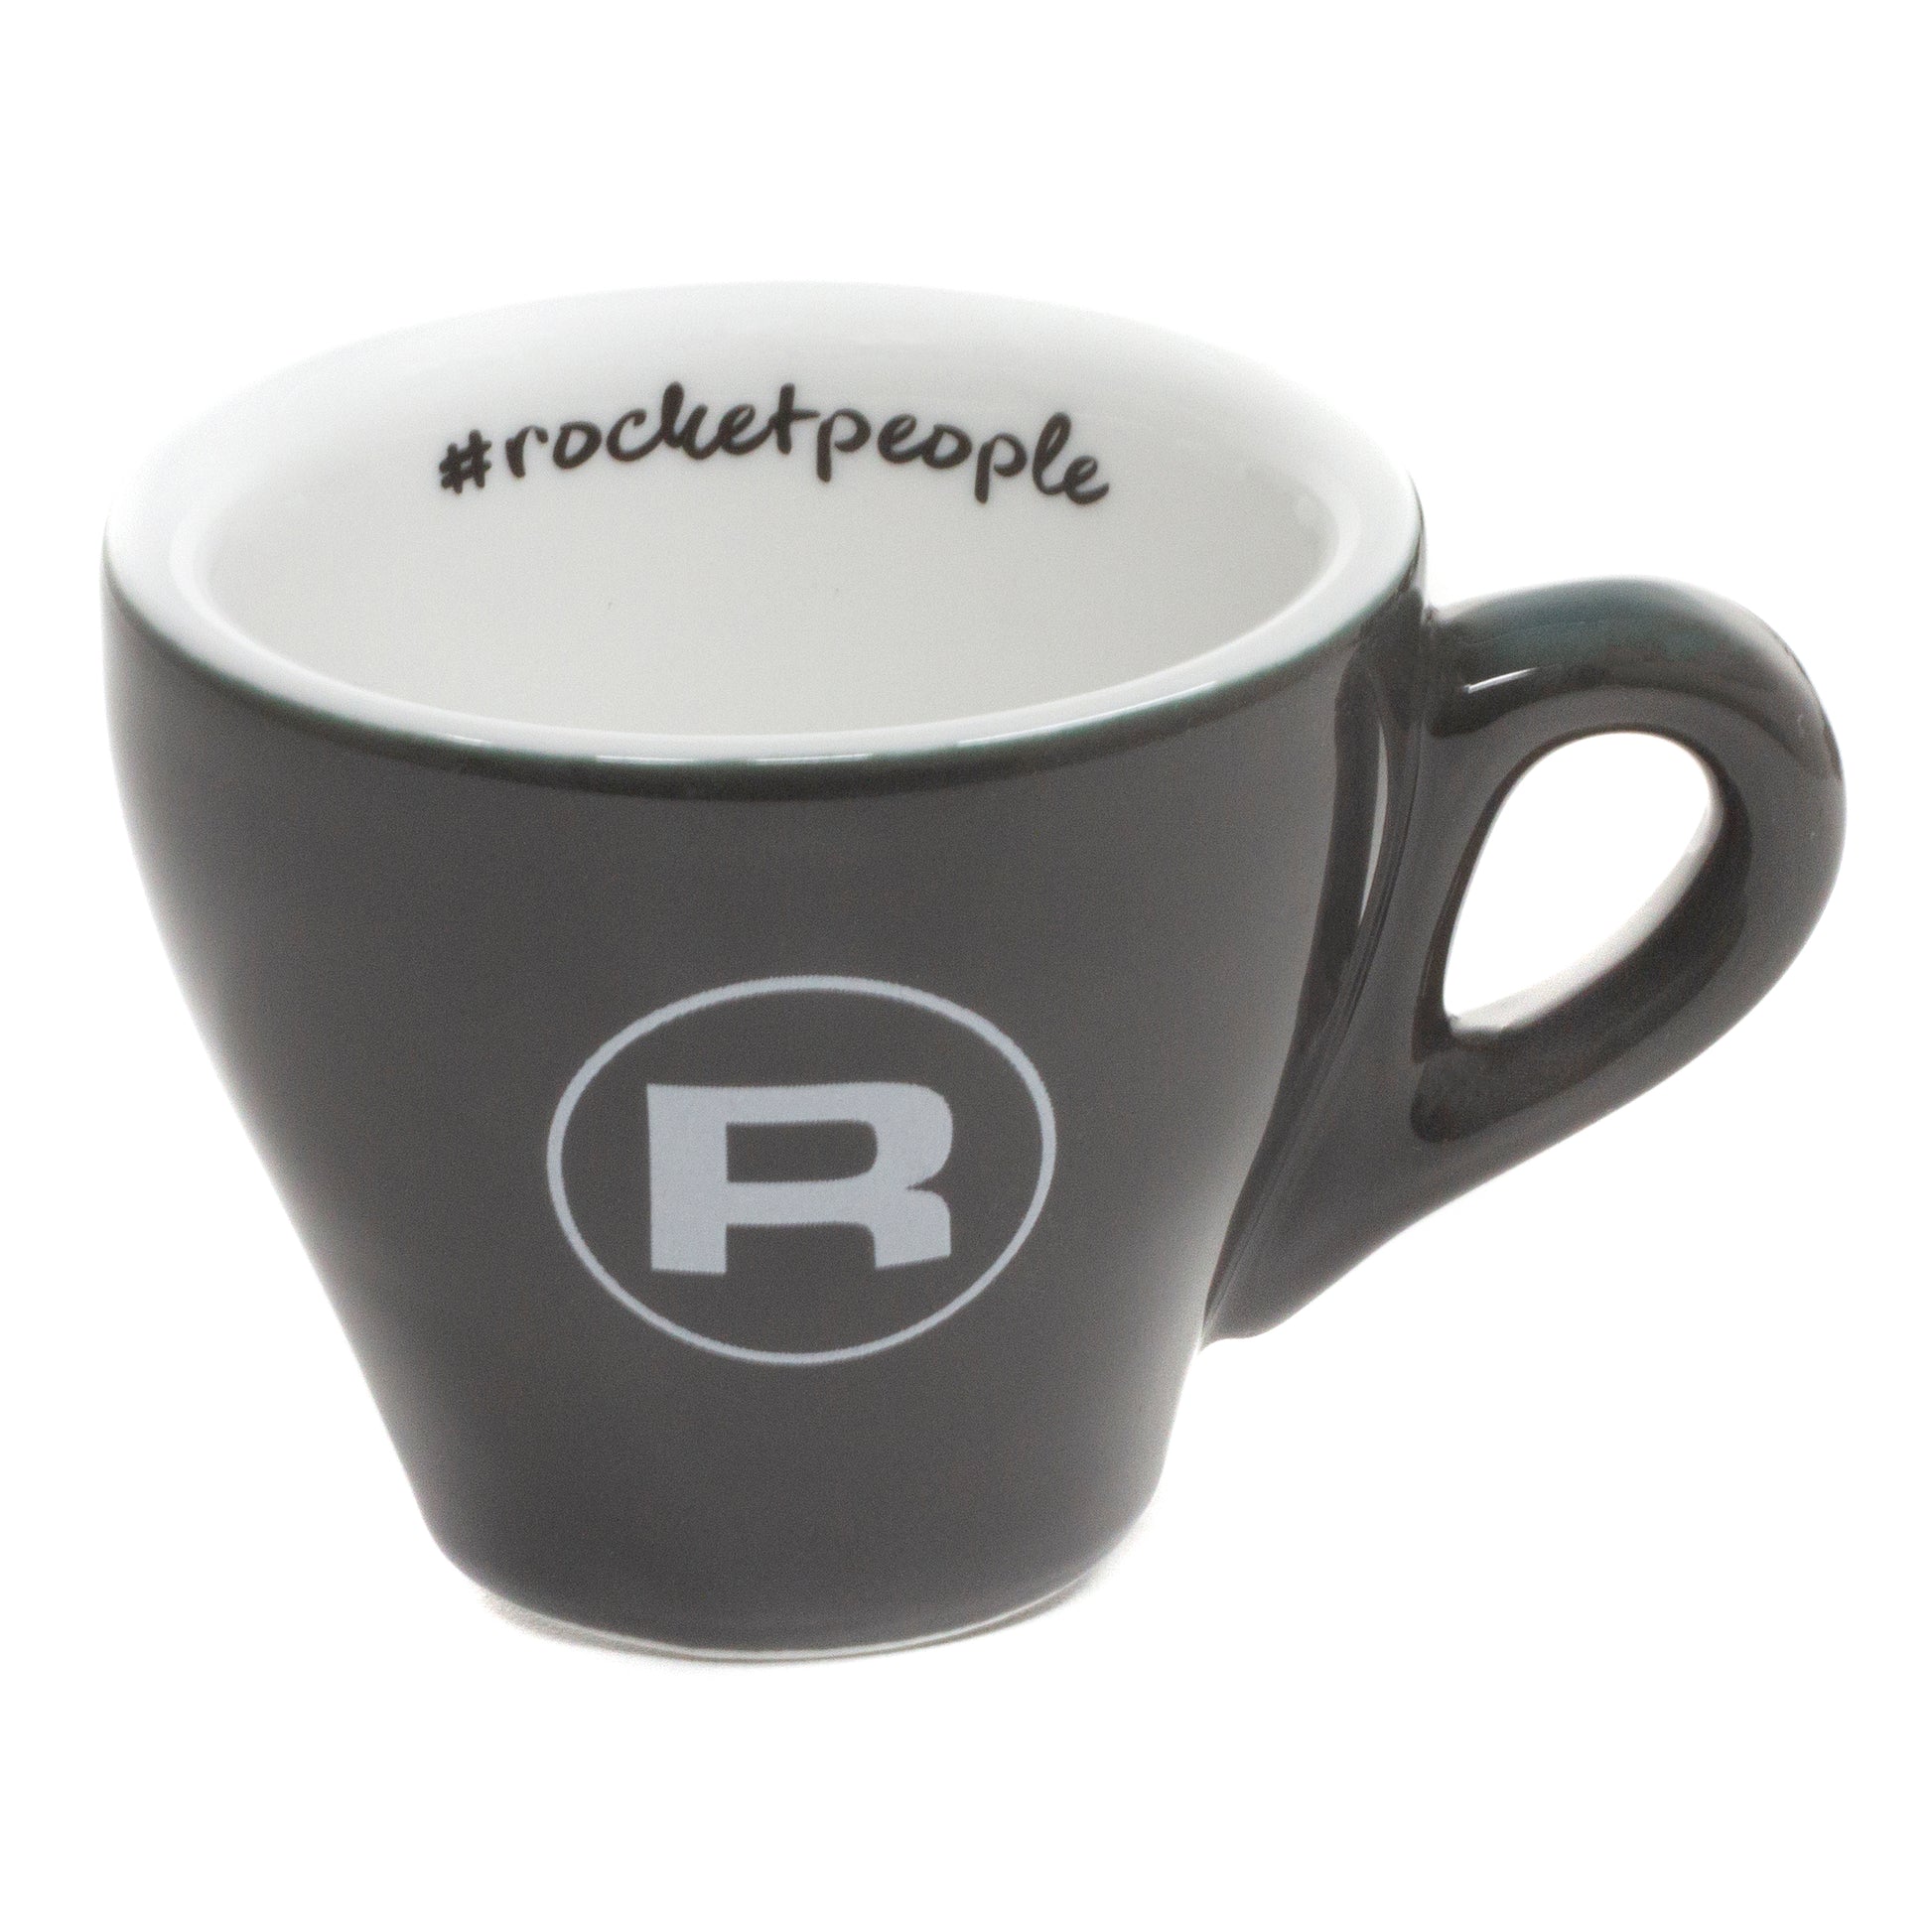 Rocket Espresso 6 Piece Espresso Cup and Saucer Set - Grey – Whole Latte  Love